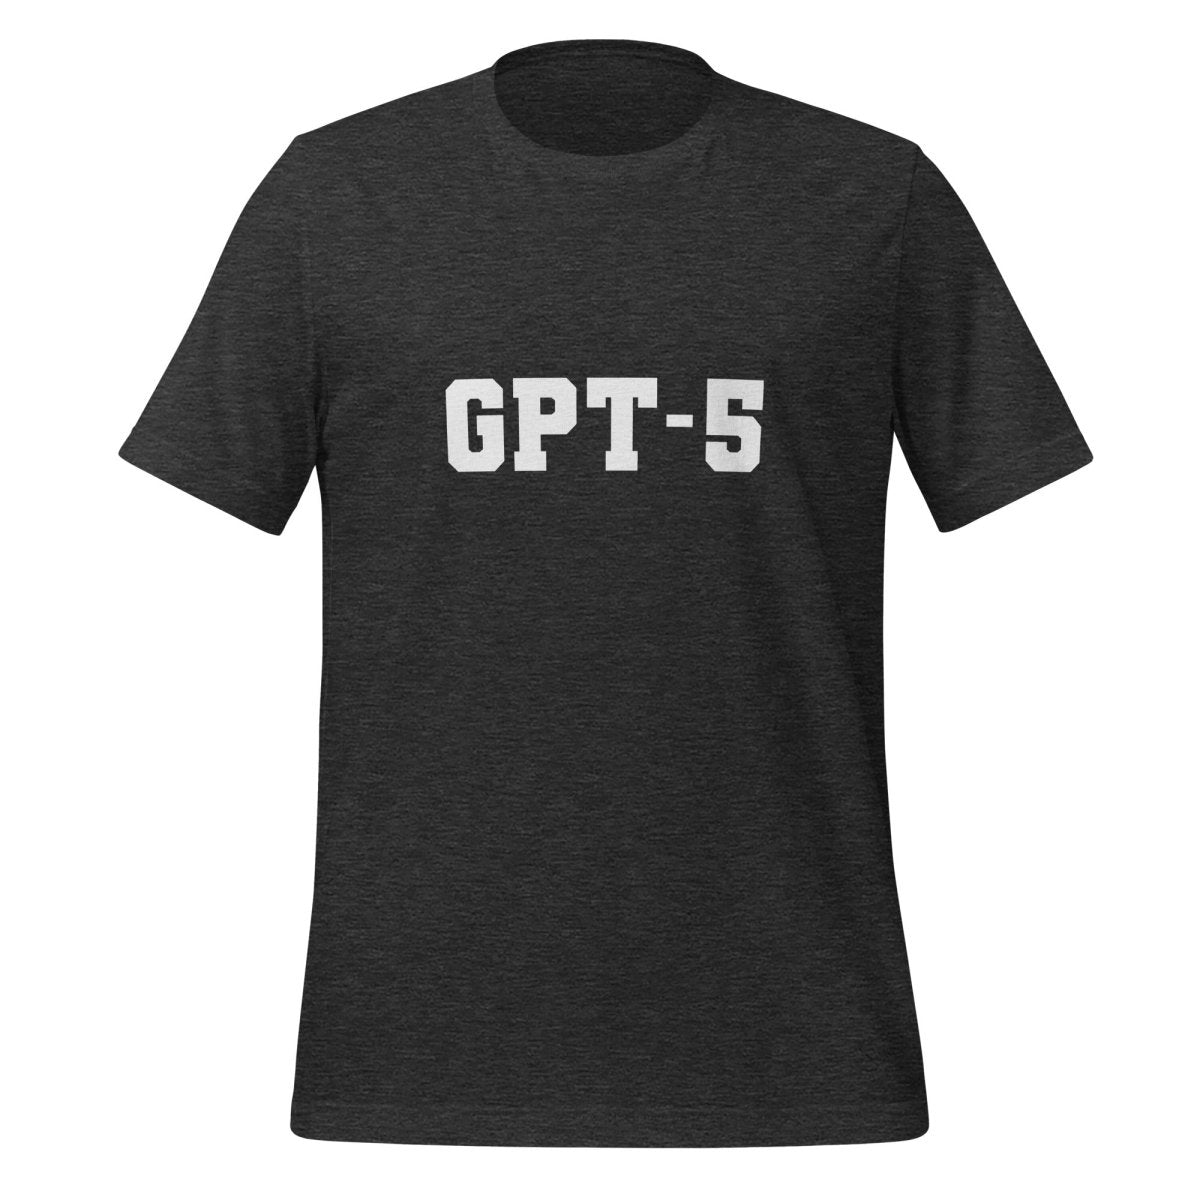 GPT - 5 T - Shirt 3 (unisex) - Dark Grey Heather - AI Store